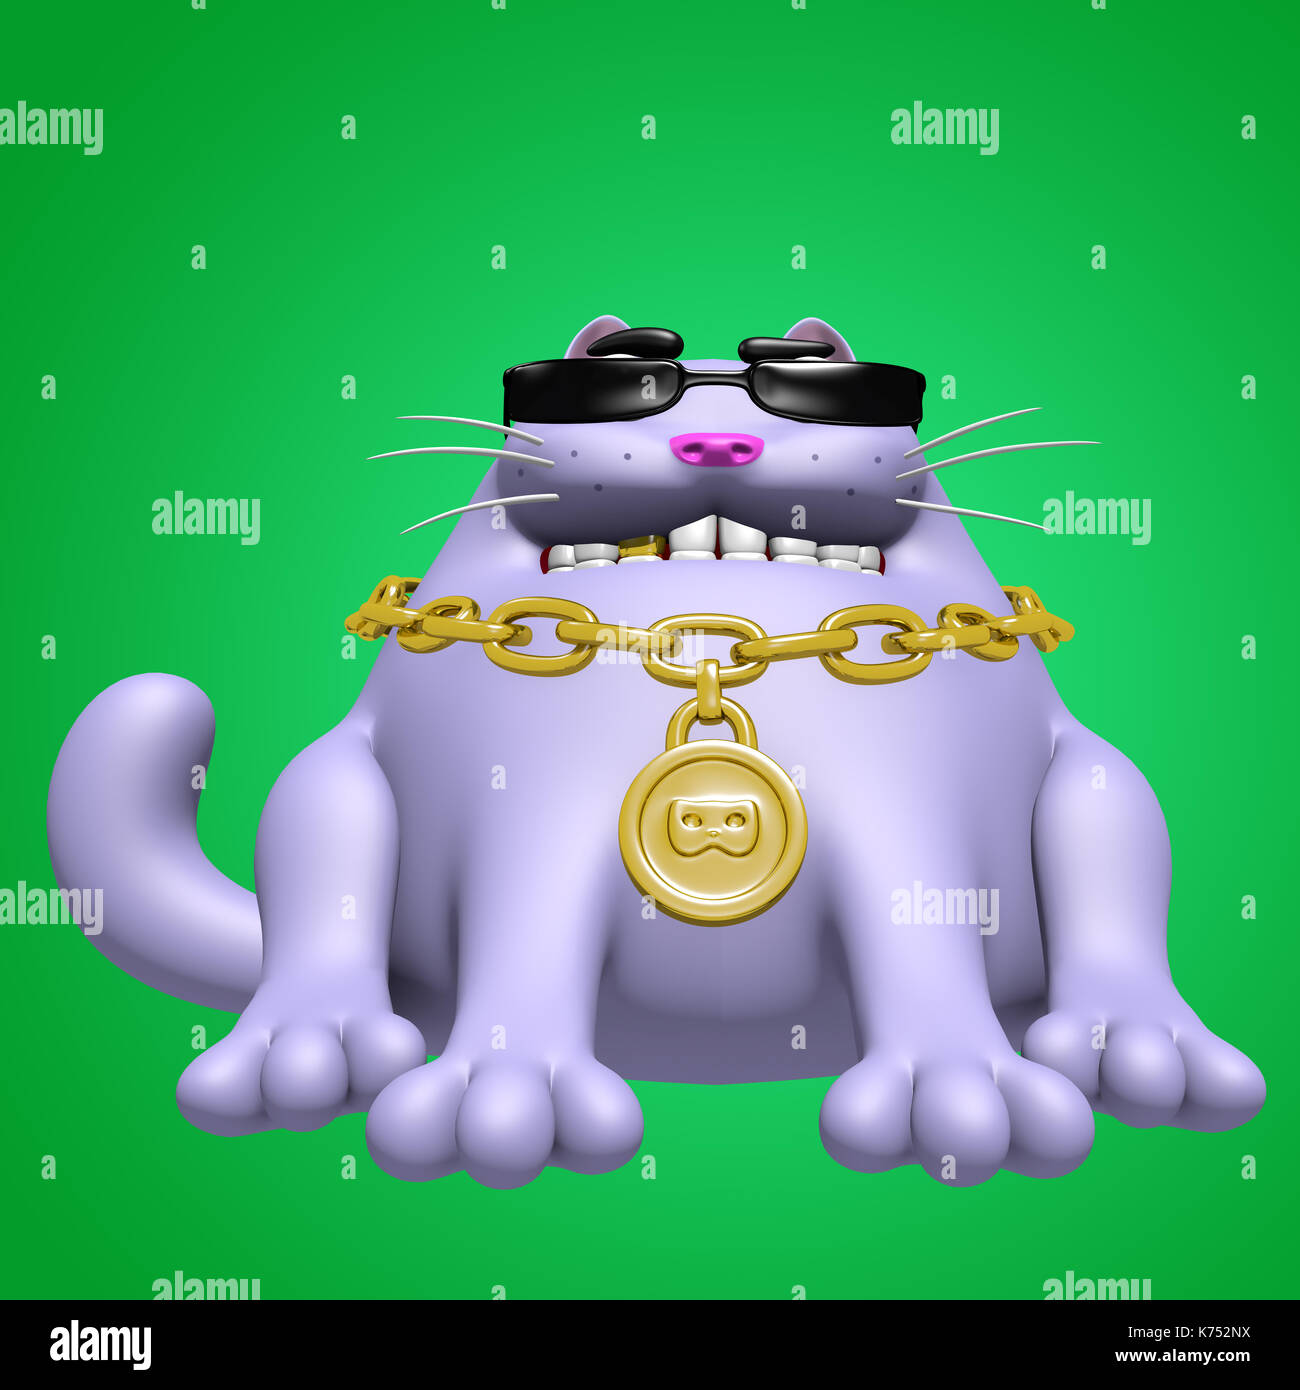 fat cat cartoon character